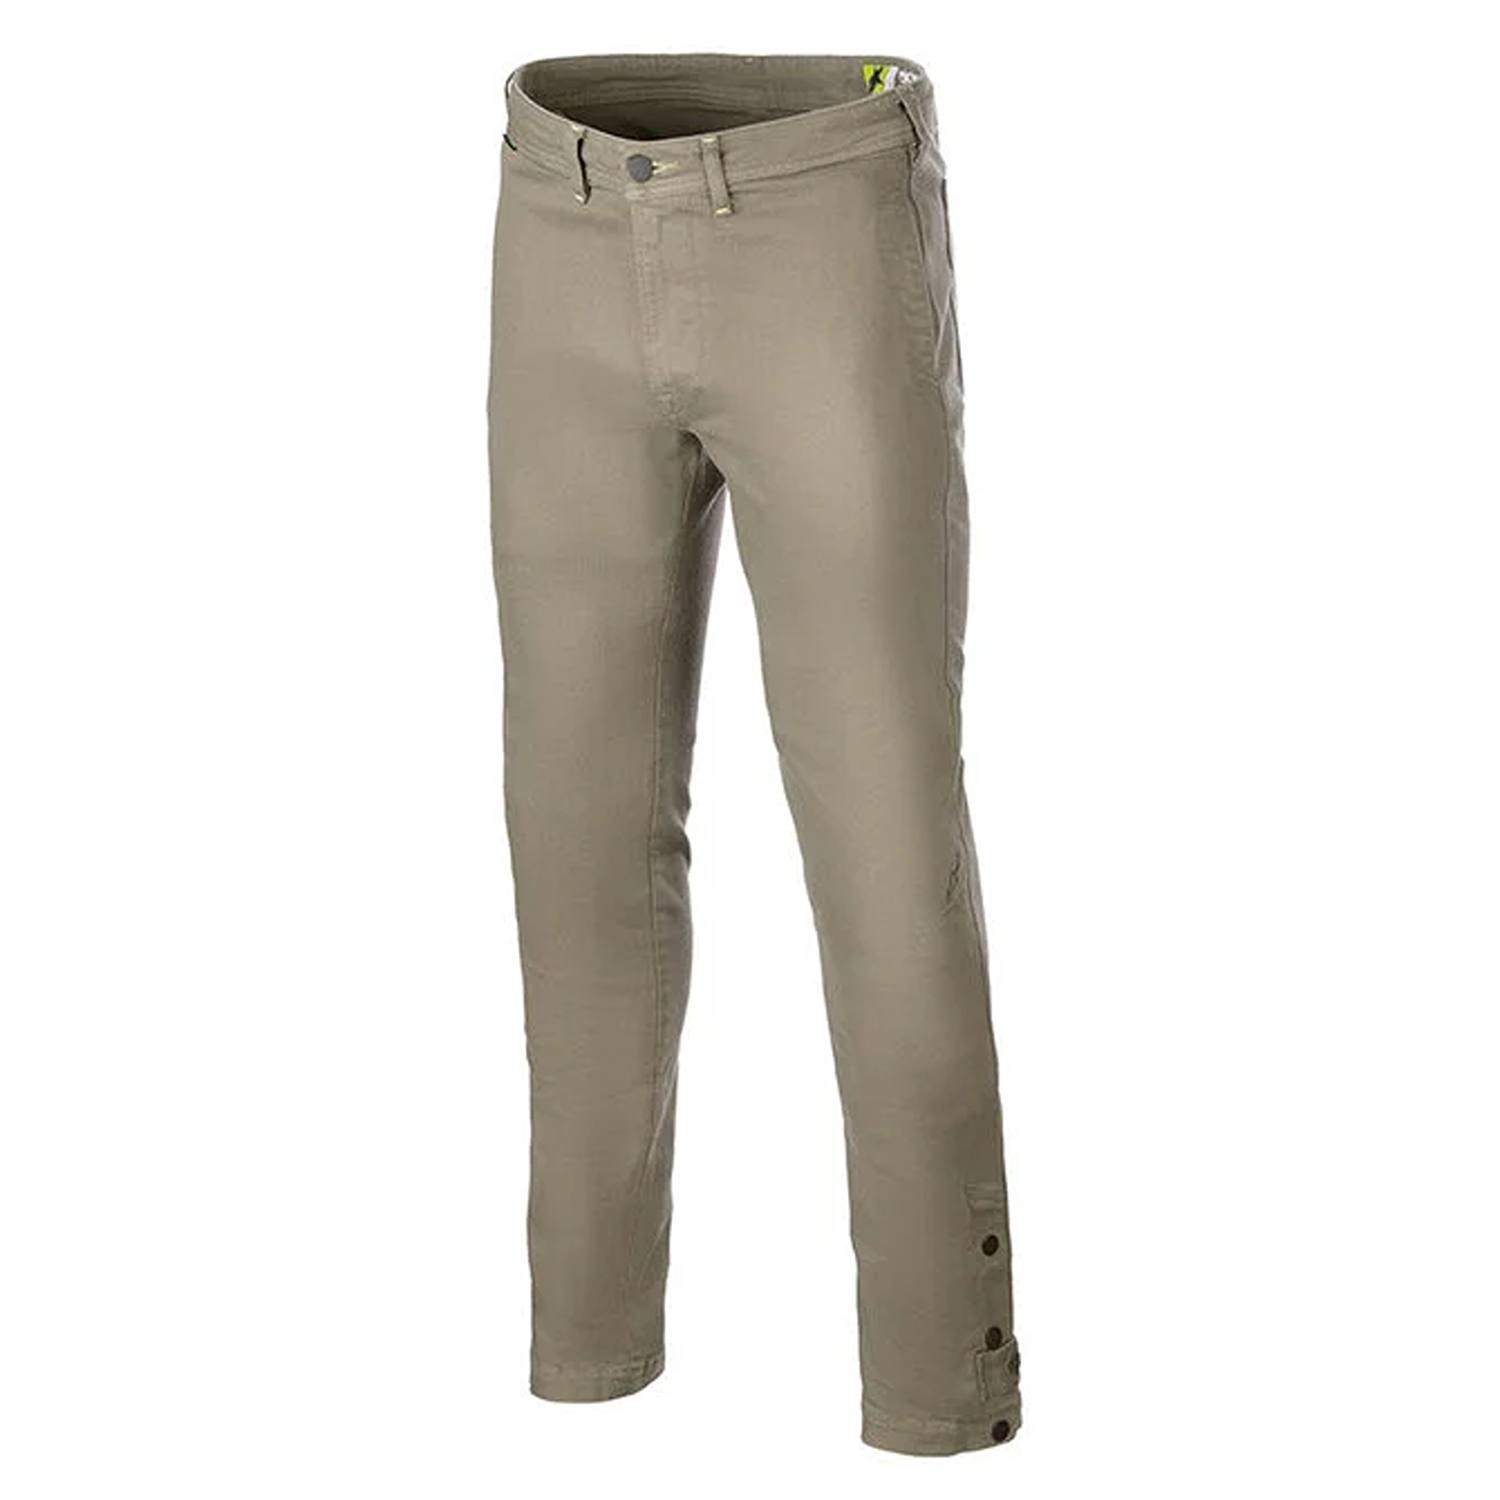 Image of Alpinestars Stratos Regular Fit Tech Riding Pants Military Green Size 38 ID 8059347165462